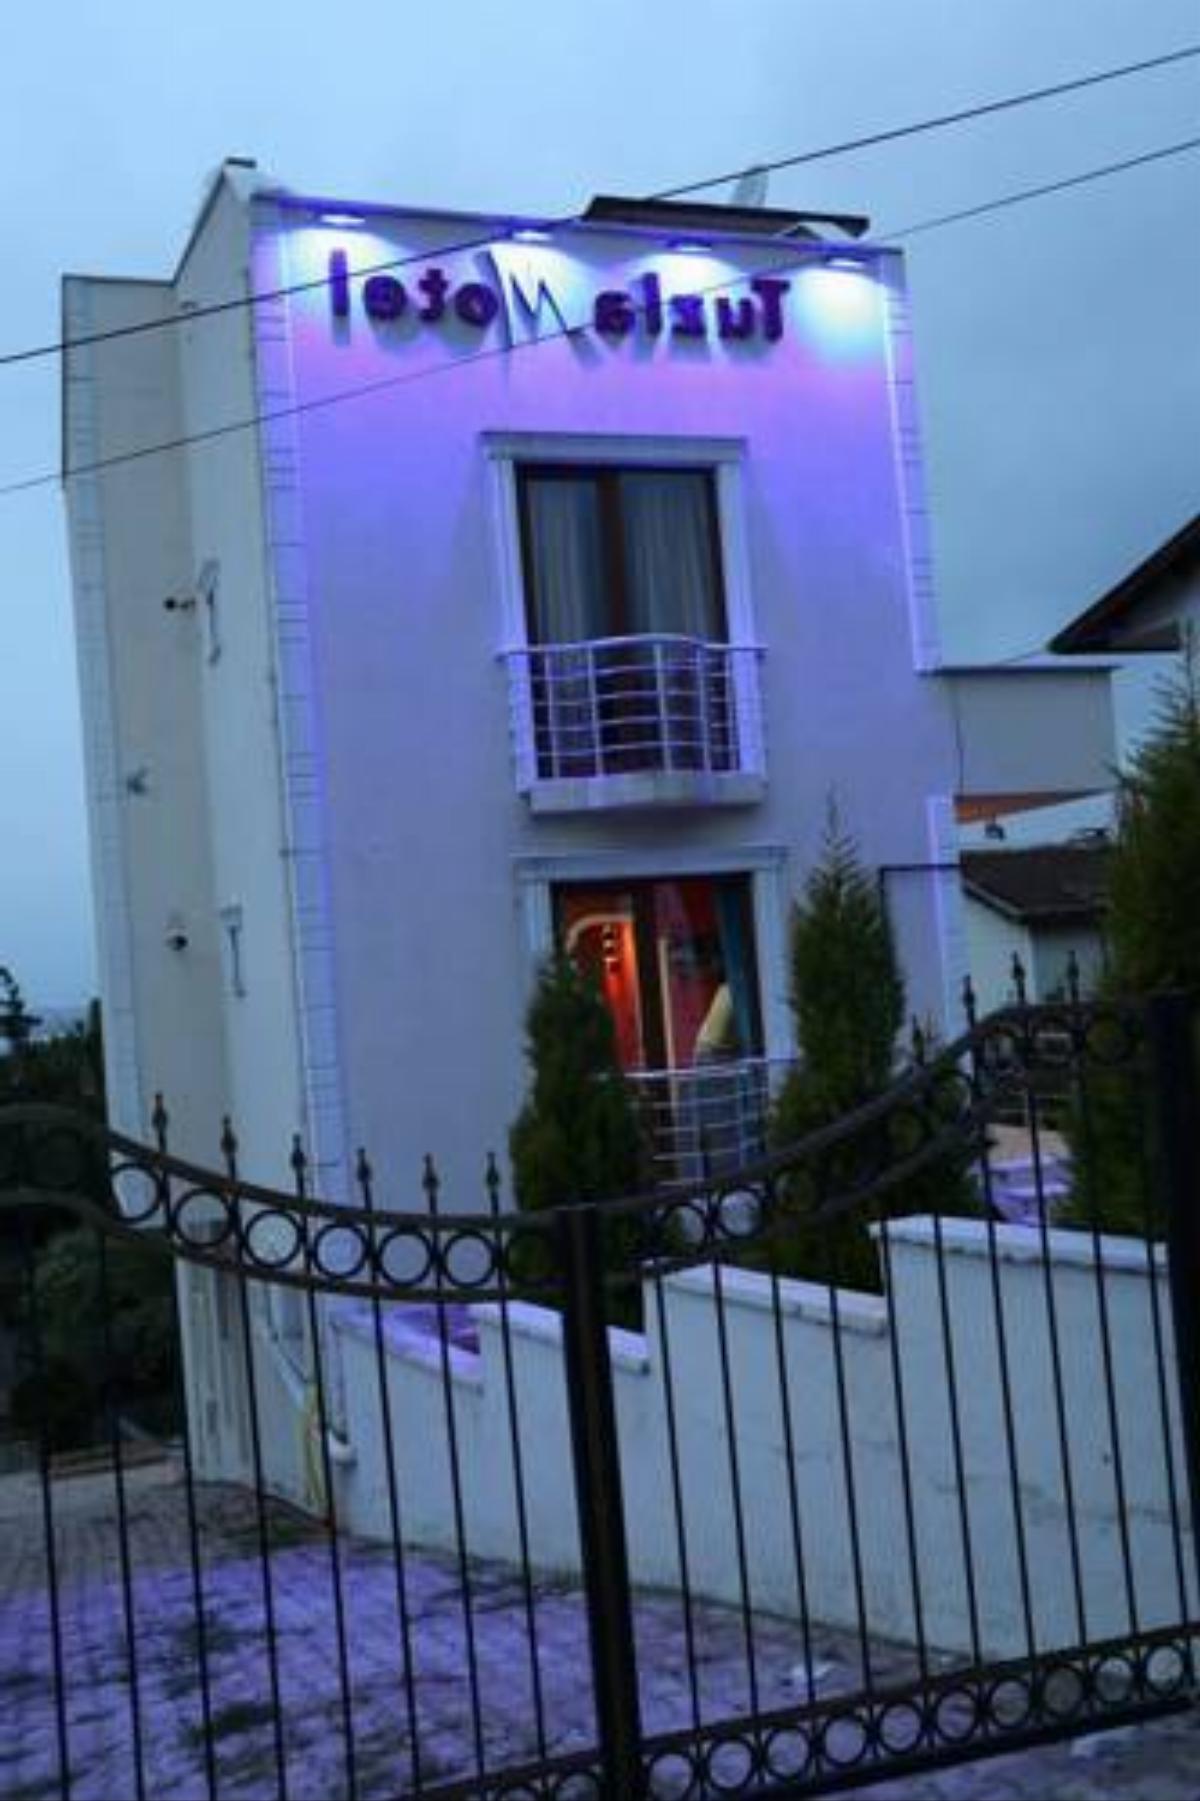 Tuzlam Otel Hotel Tuzla Turkey